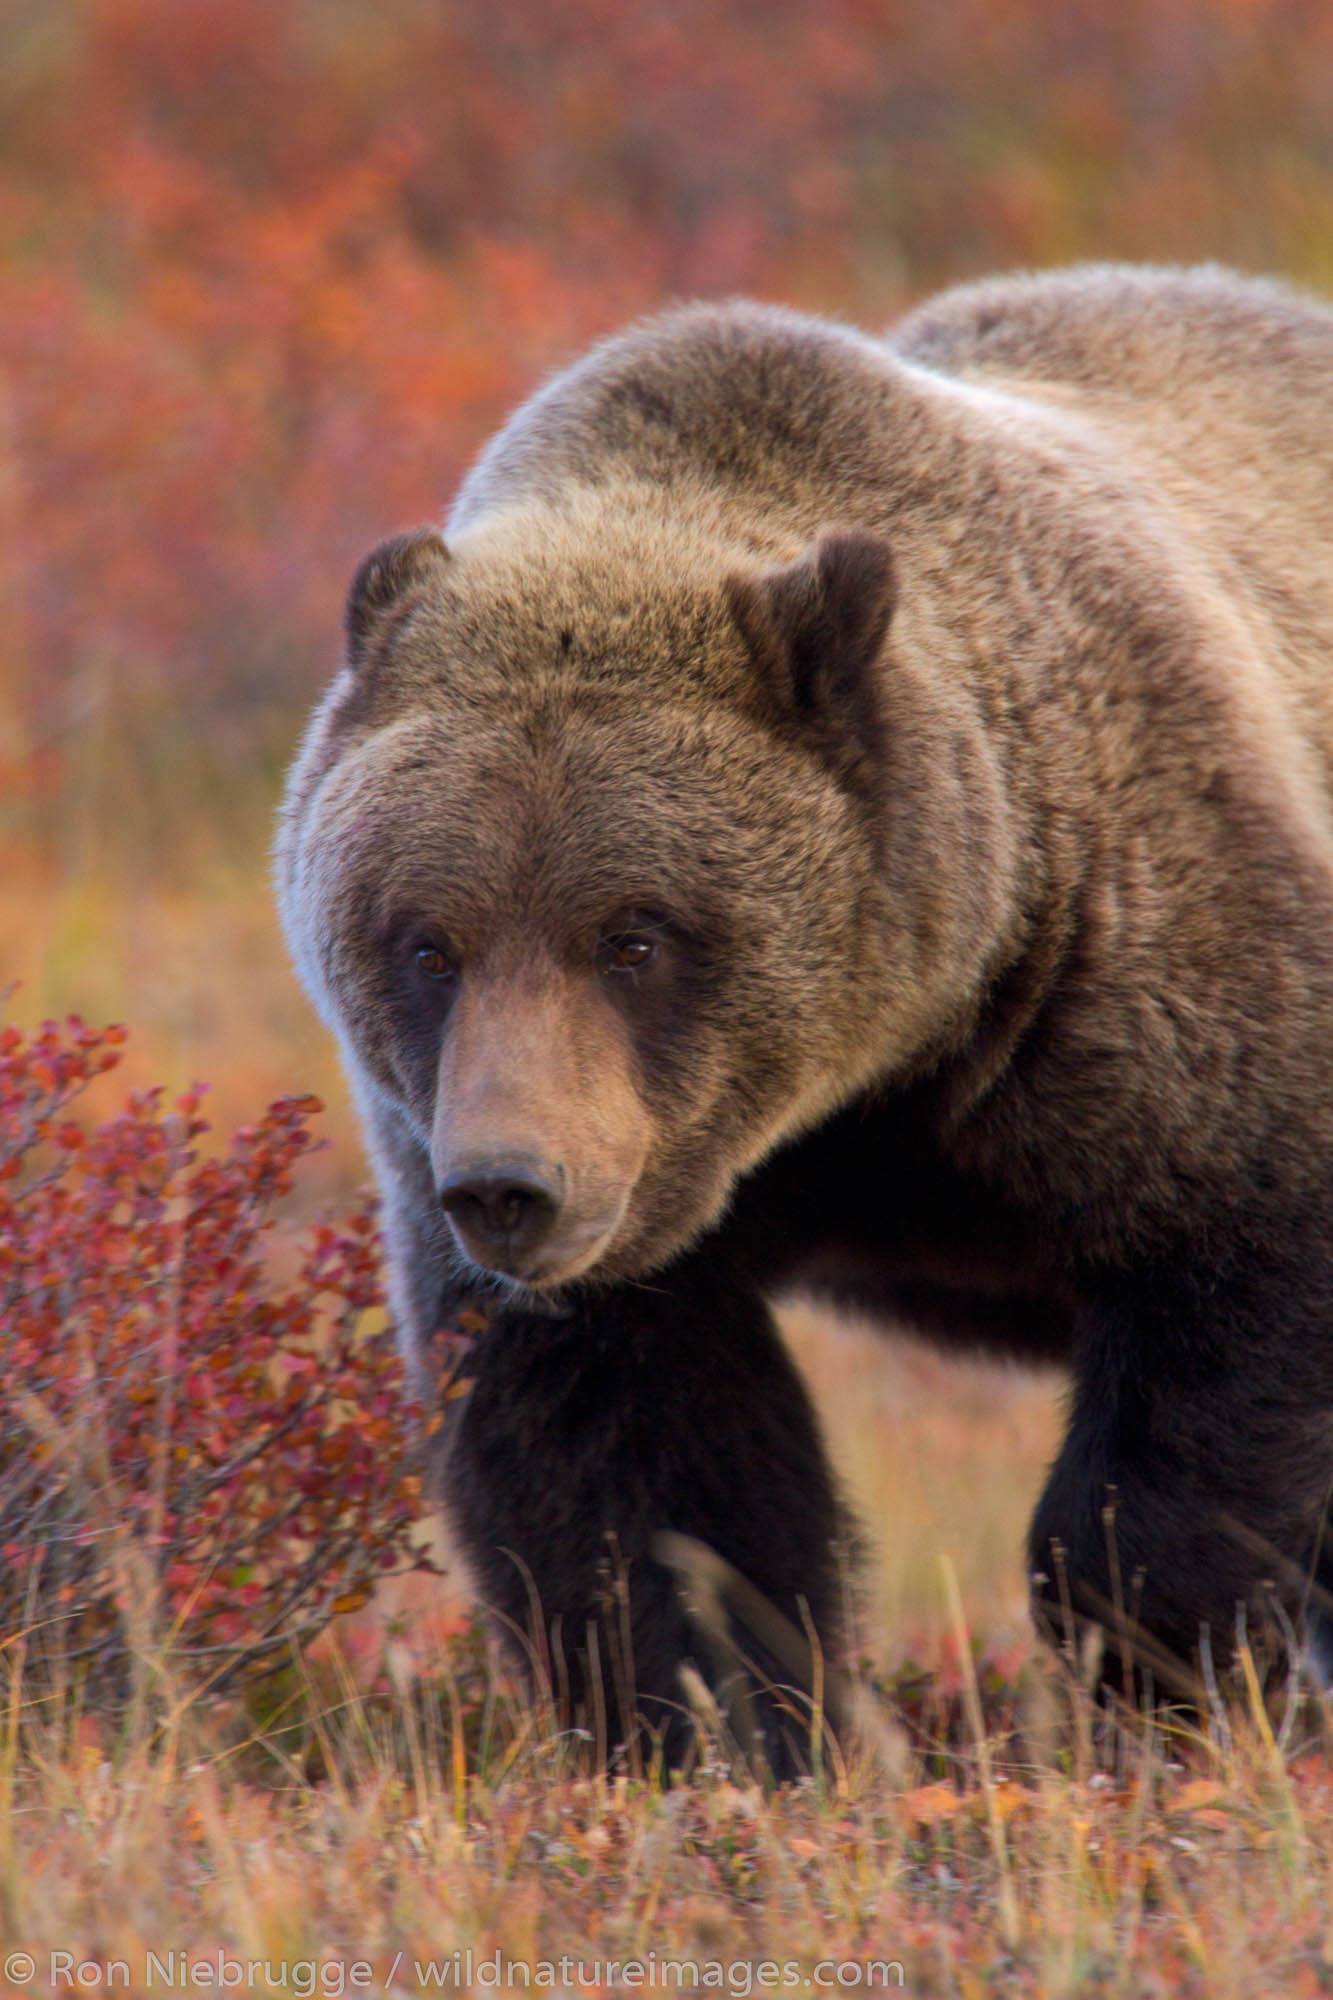 Grizzly bear, Denali National Park, Alaska.